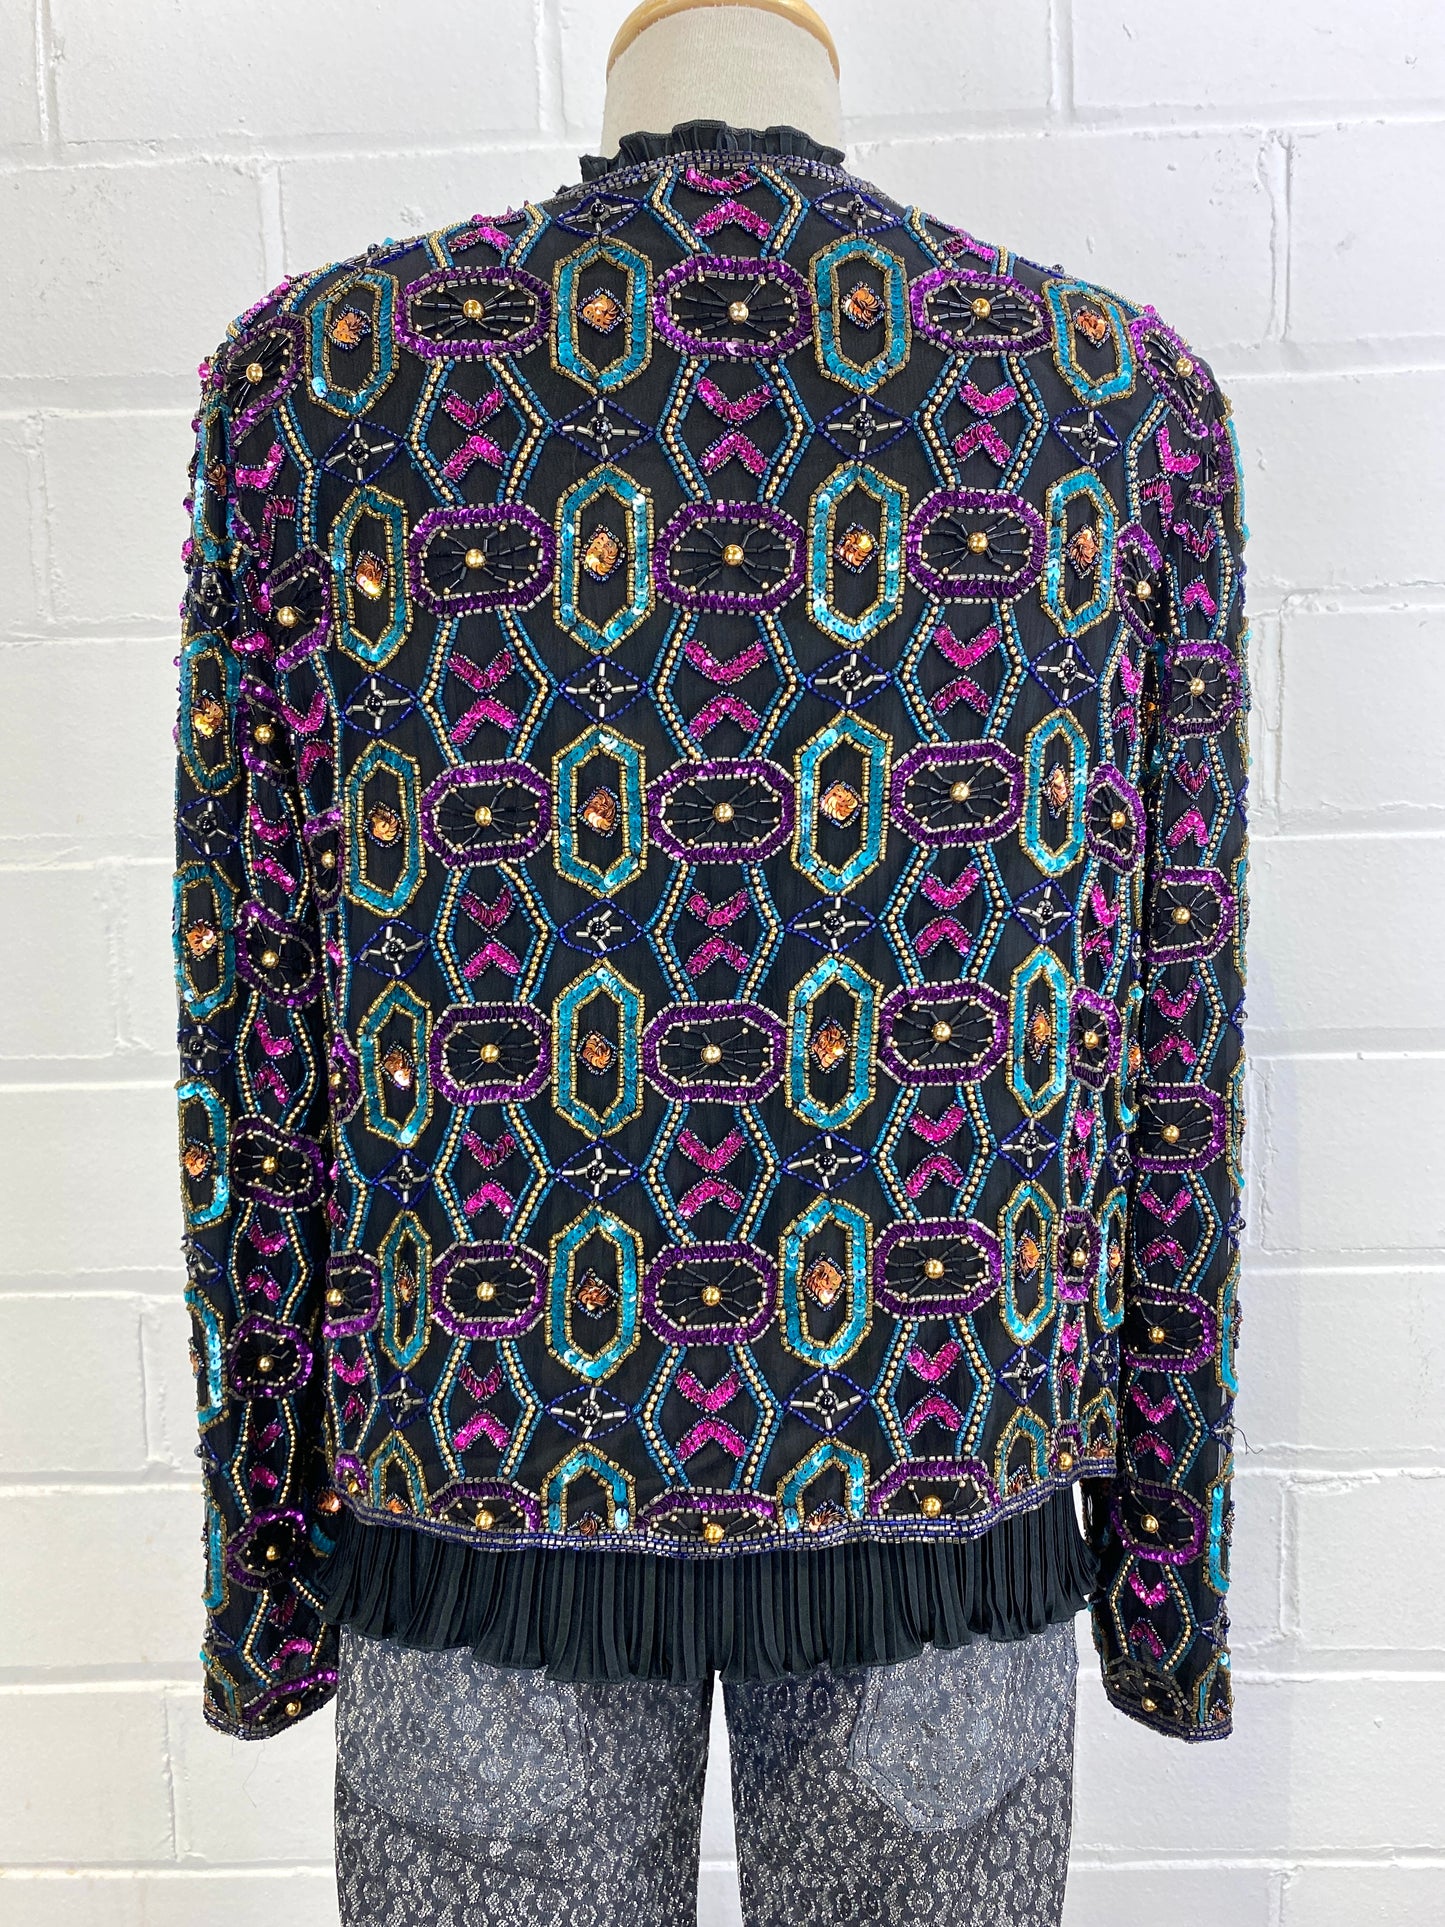 Vintage 1980s Black Beaded Sequin Cardigan Jacket, Papell Boutique, Medium 